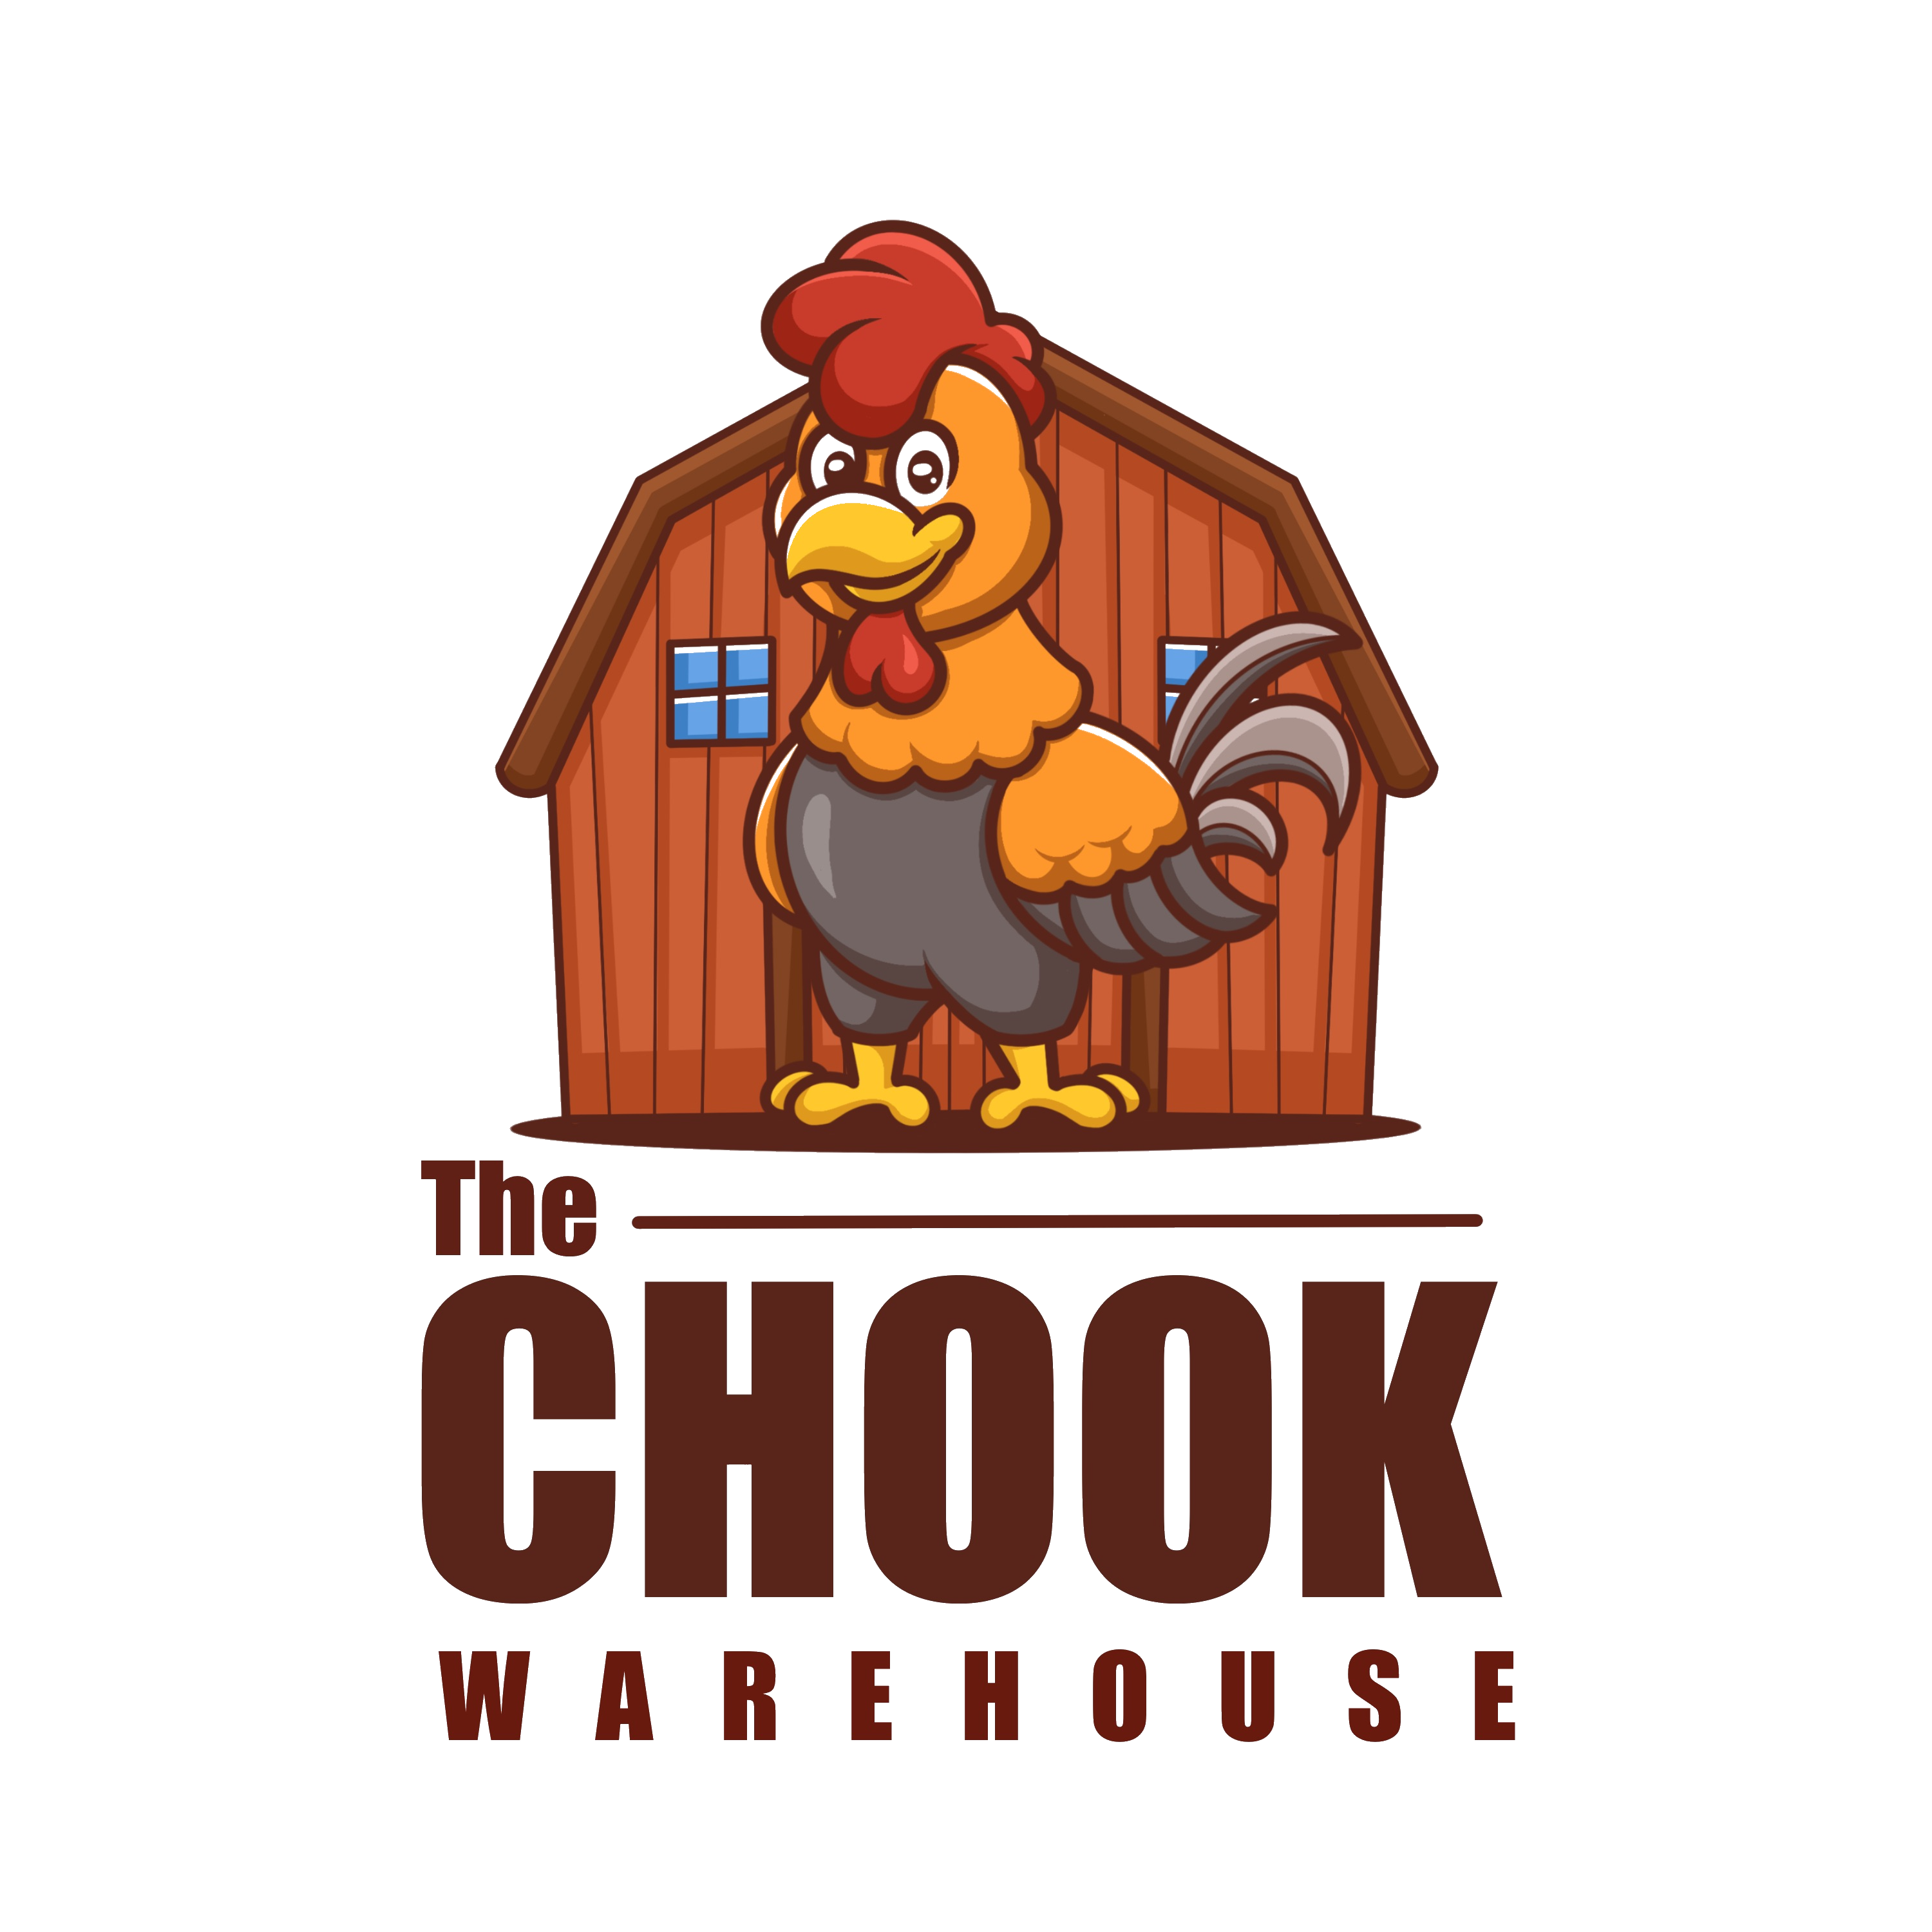 Chook Warehouse